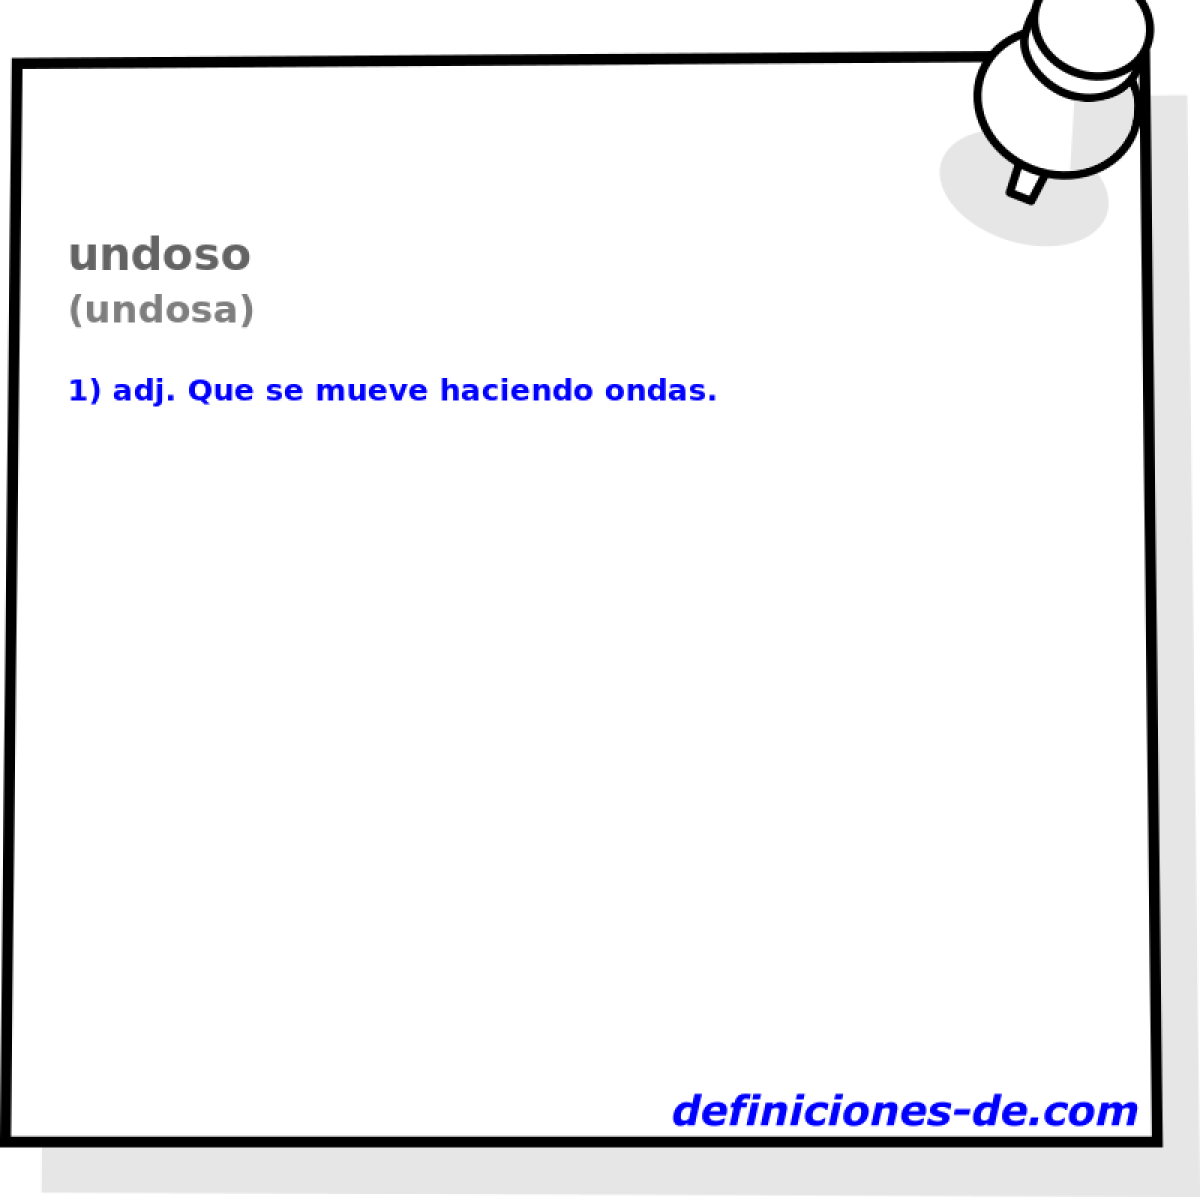 undoso (undosa)